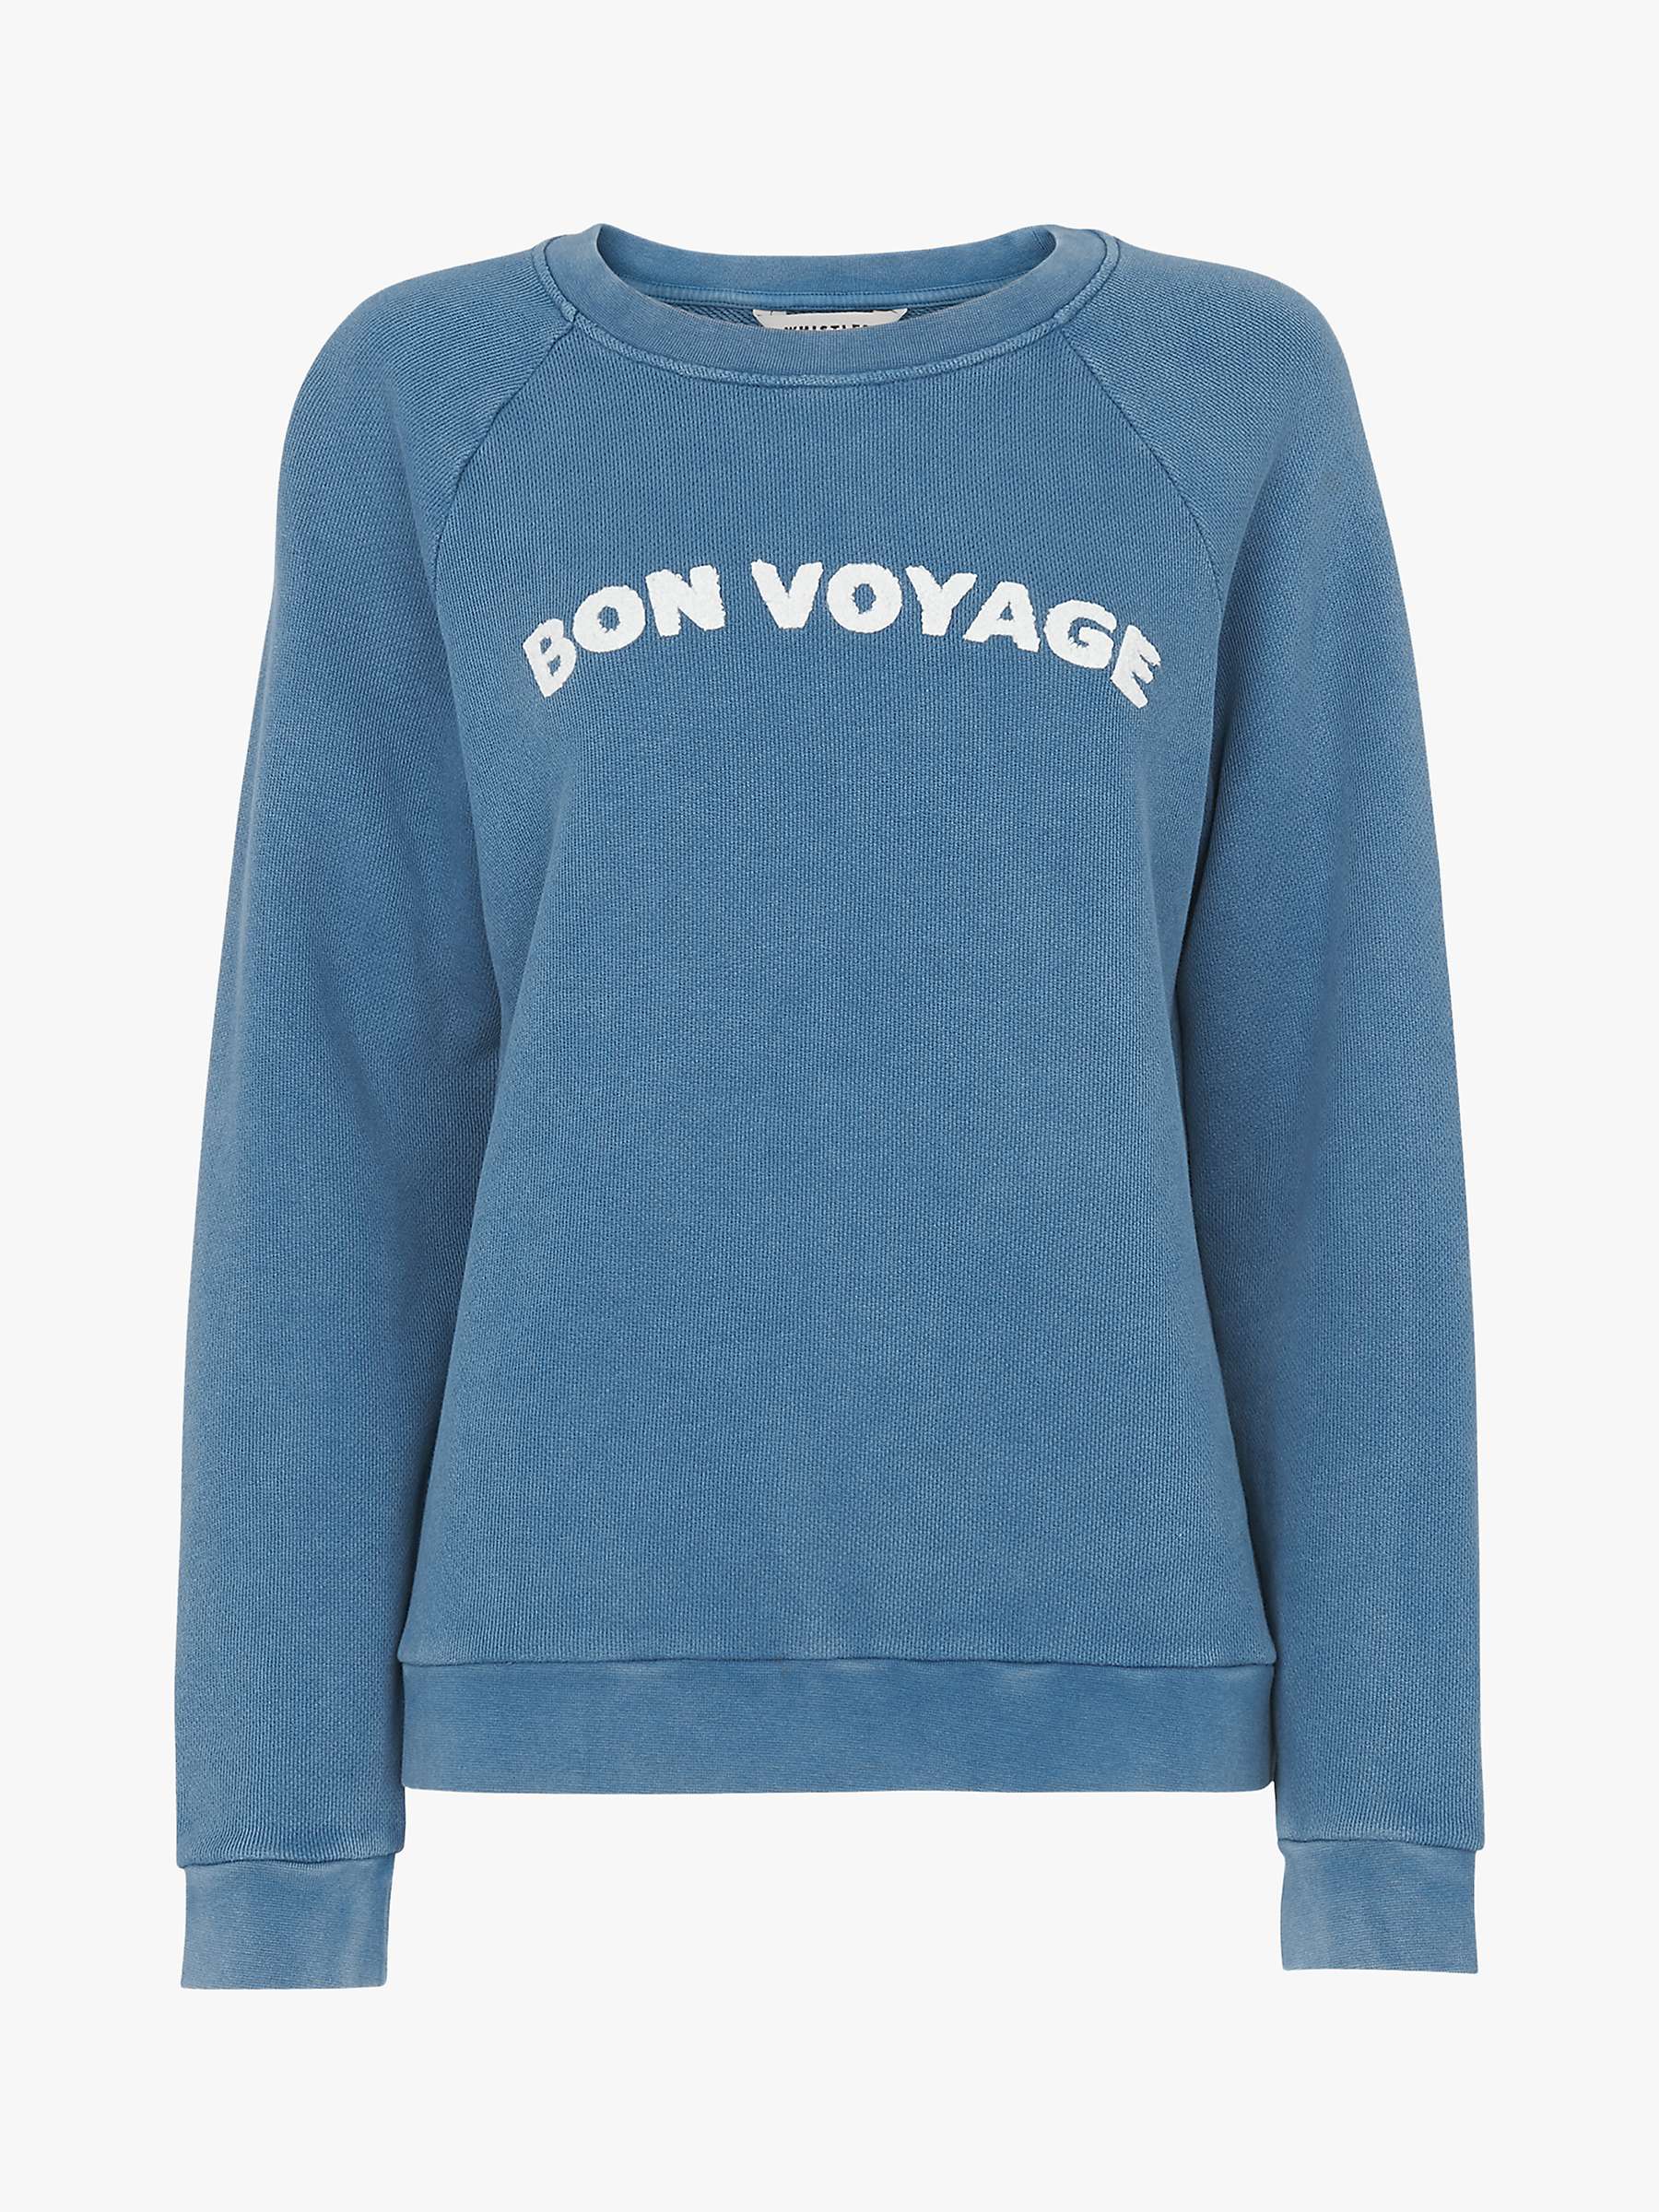 Buy Whistles Bon Voyage Sweatshirt, Pale Blue Online at johnlewis.com